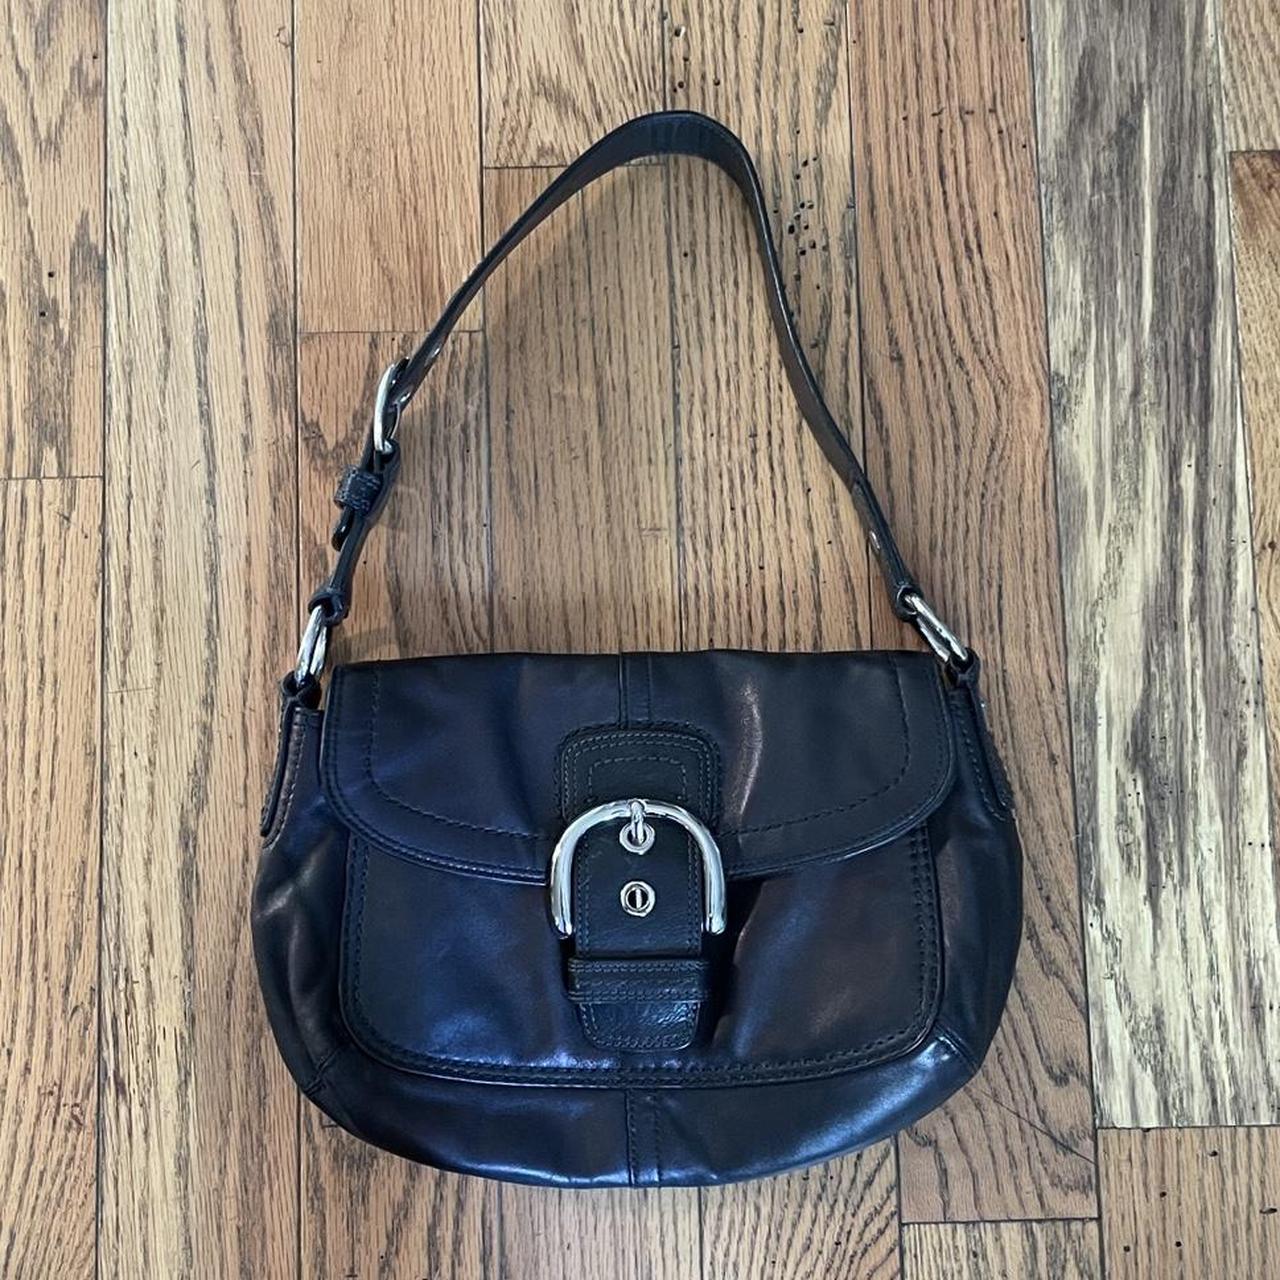 ✓Coach purse | Brown leather tote bag, Suede tote bag, Coach diaper bag